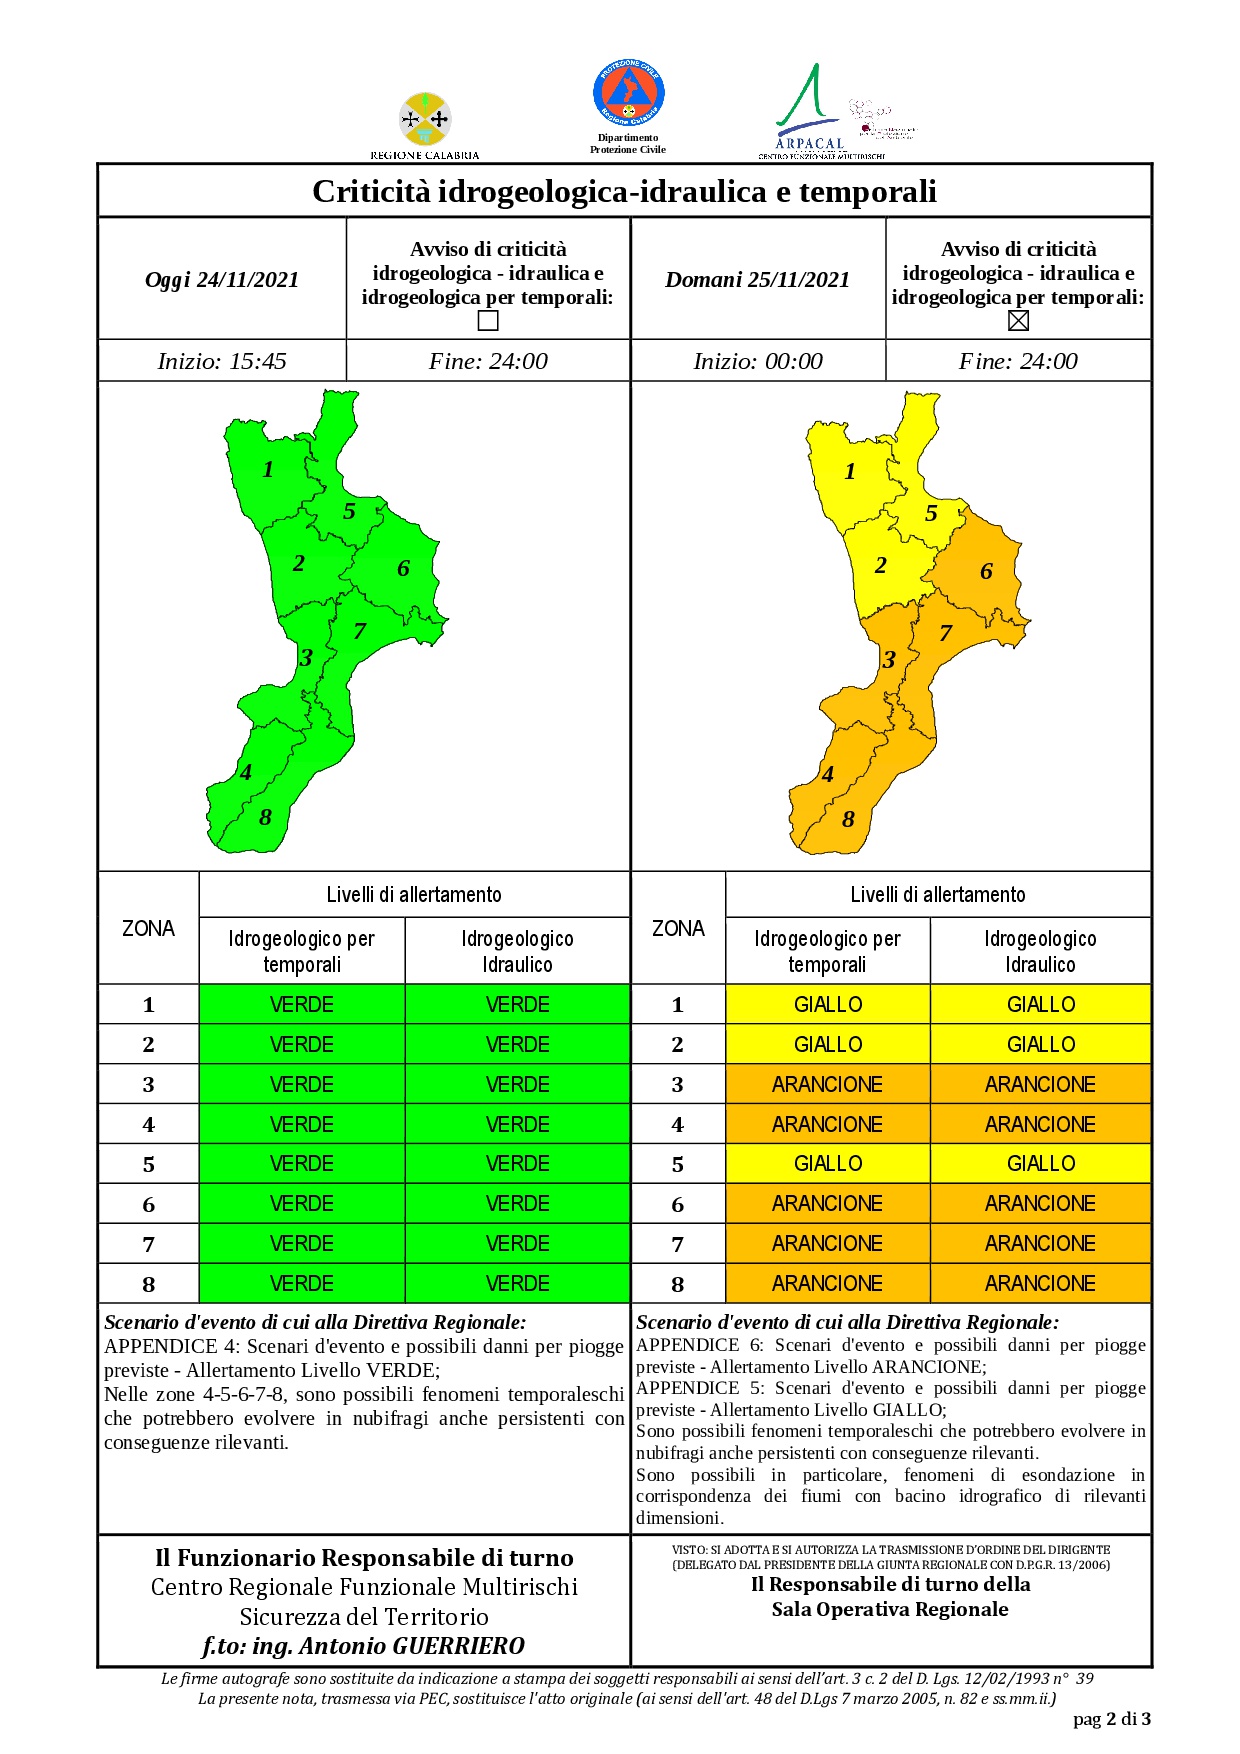 Criticità idrogeologica-idraulica e temporali in Calabria 24-11-2021